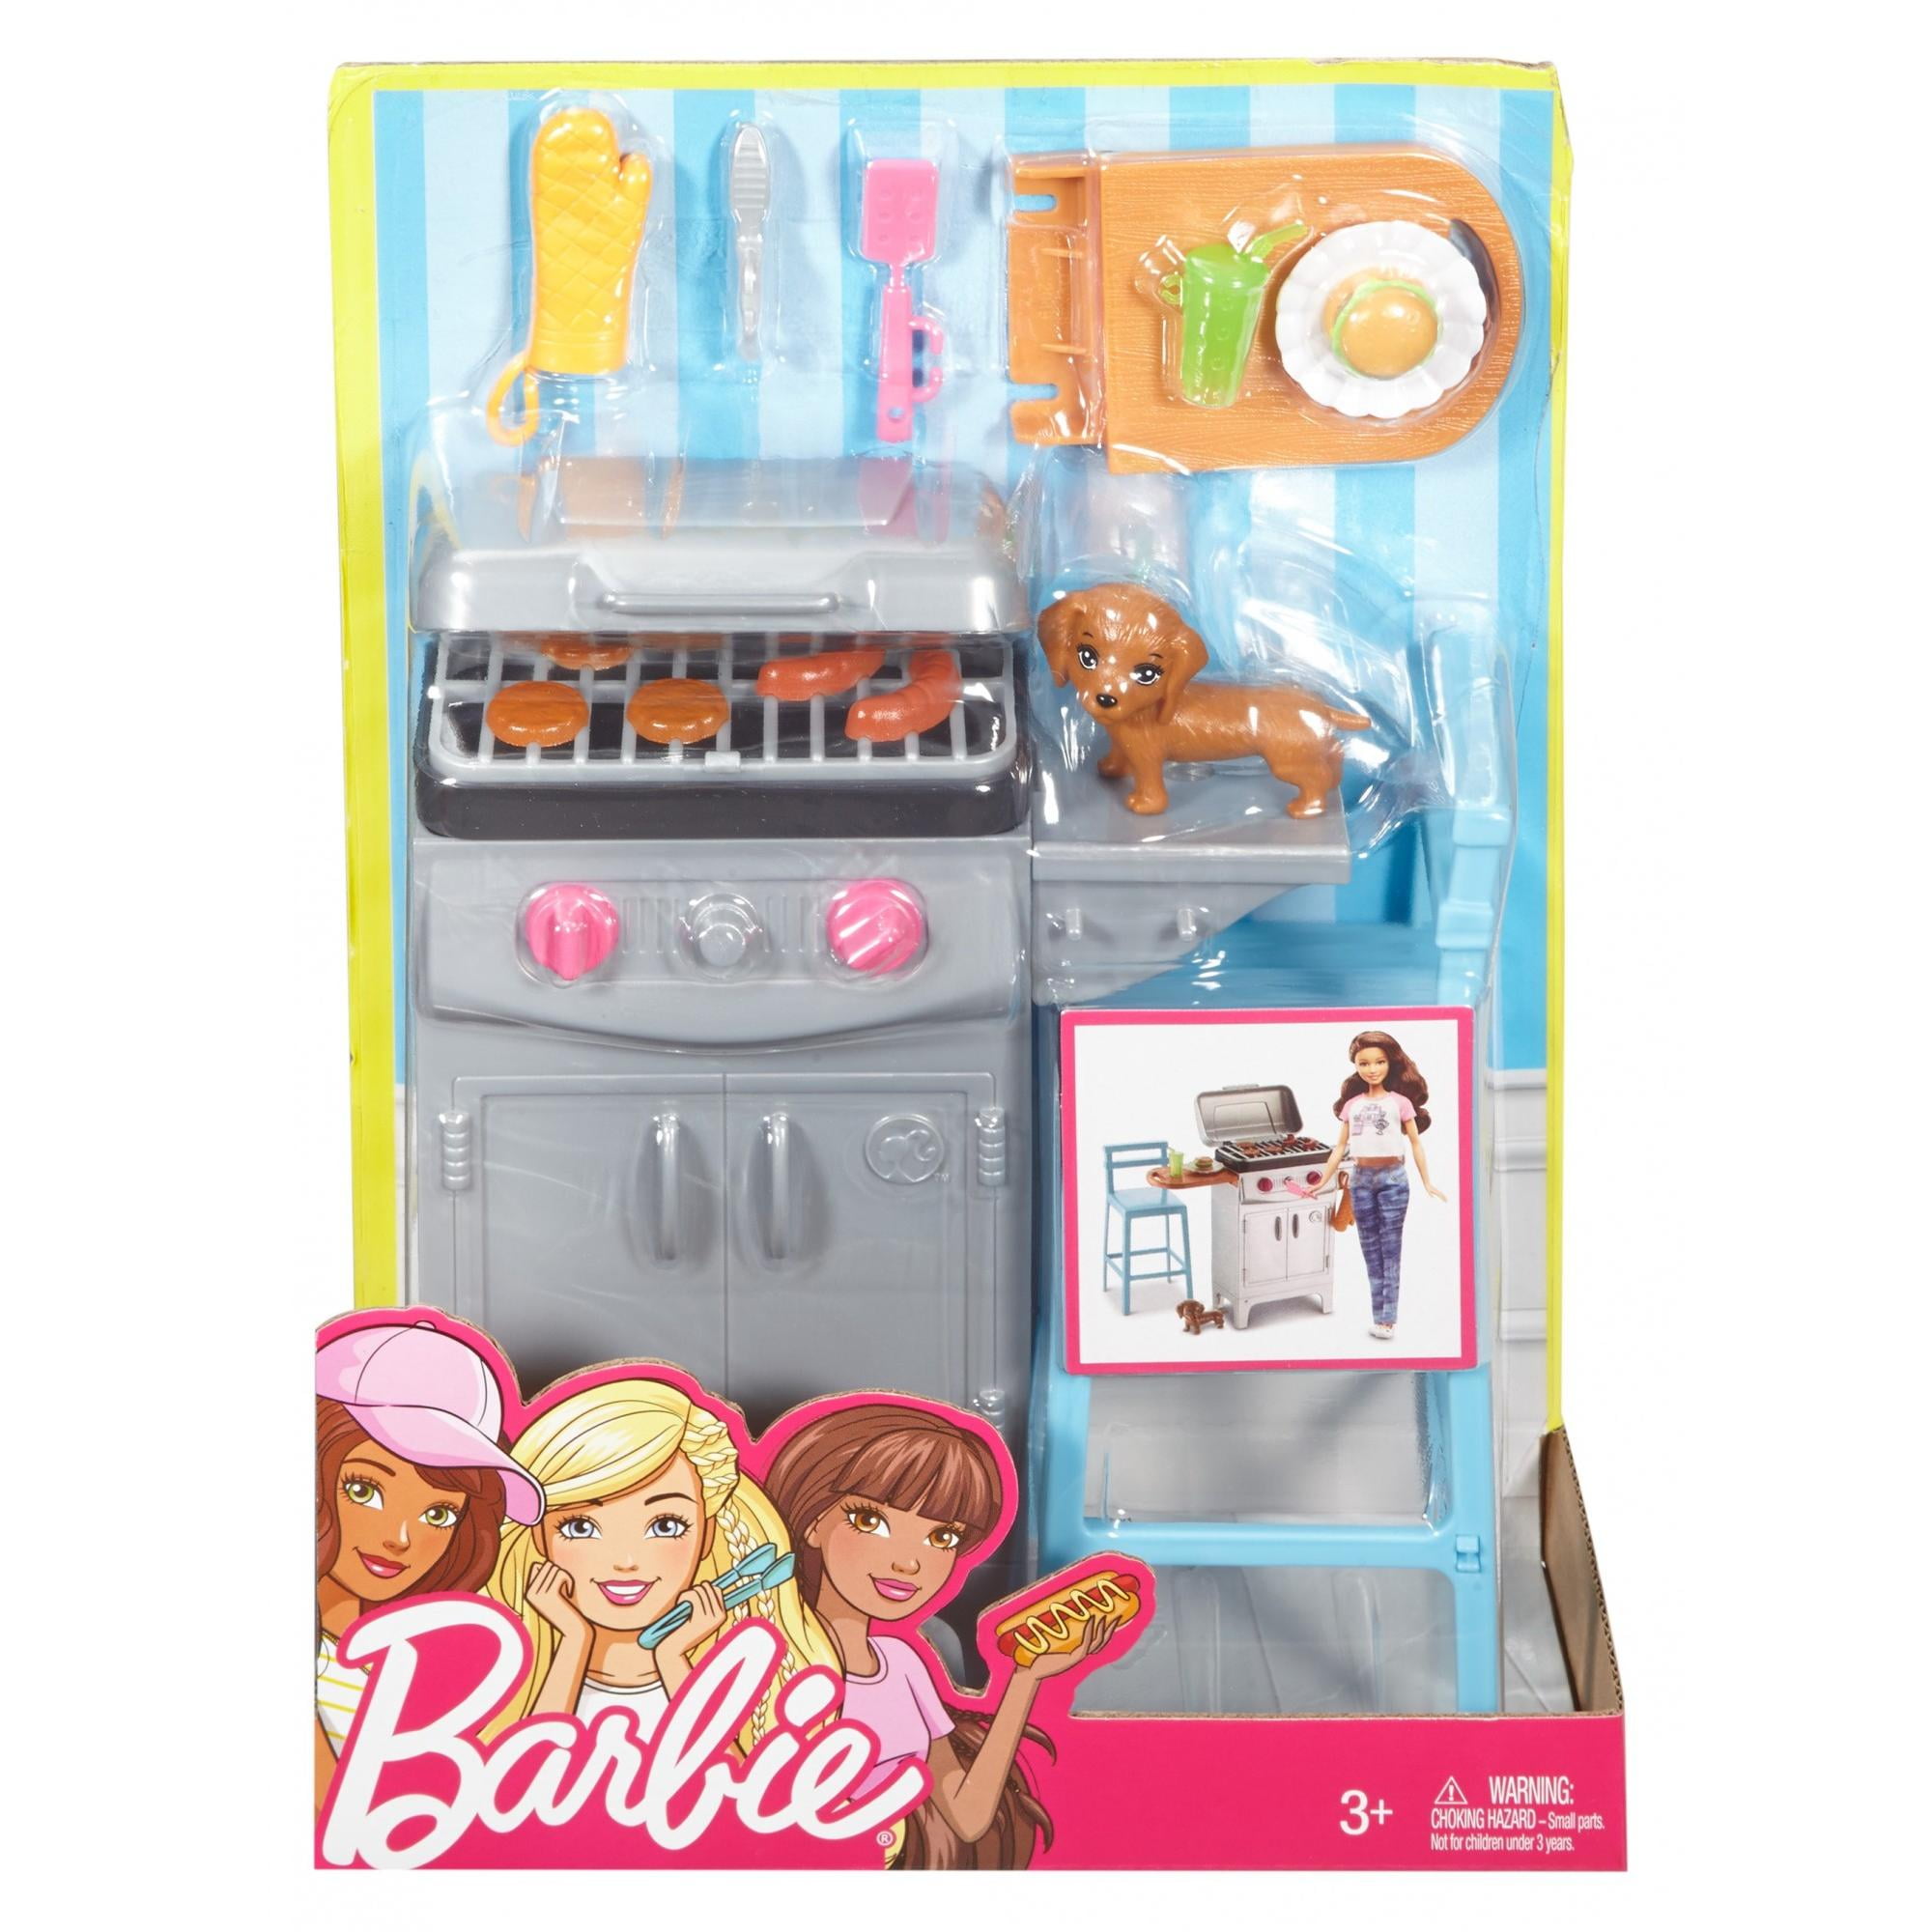 barbie barbecue set